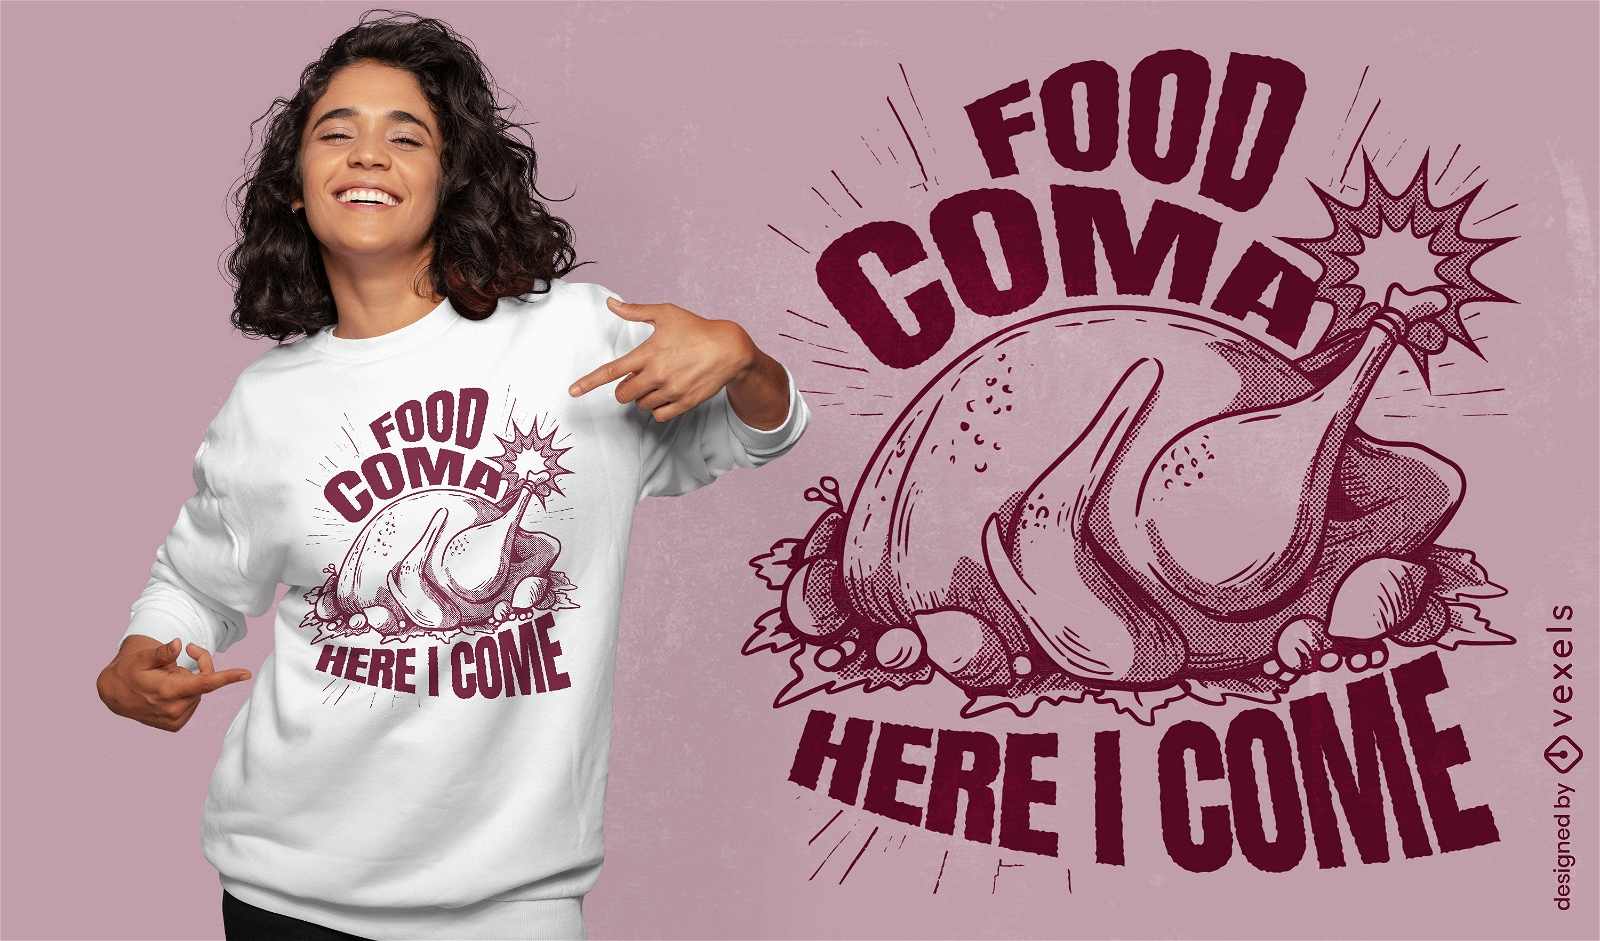 Food coma holiday t-shirt design